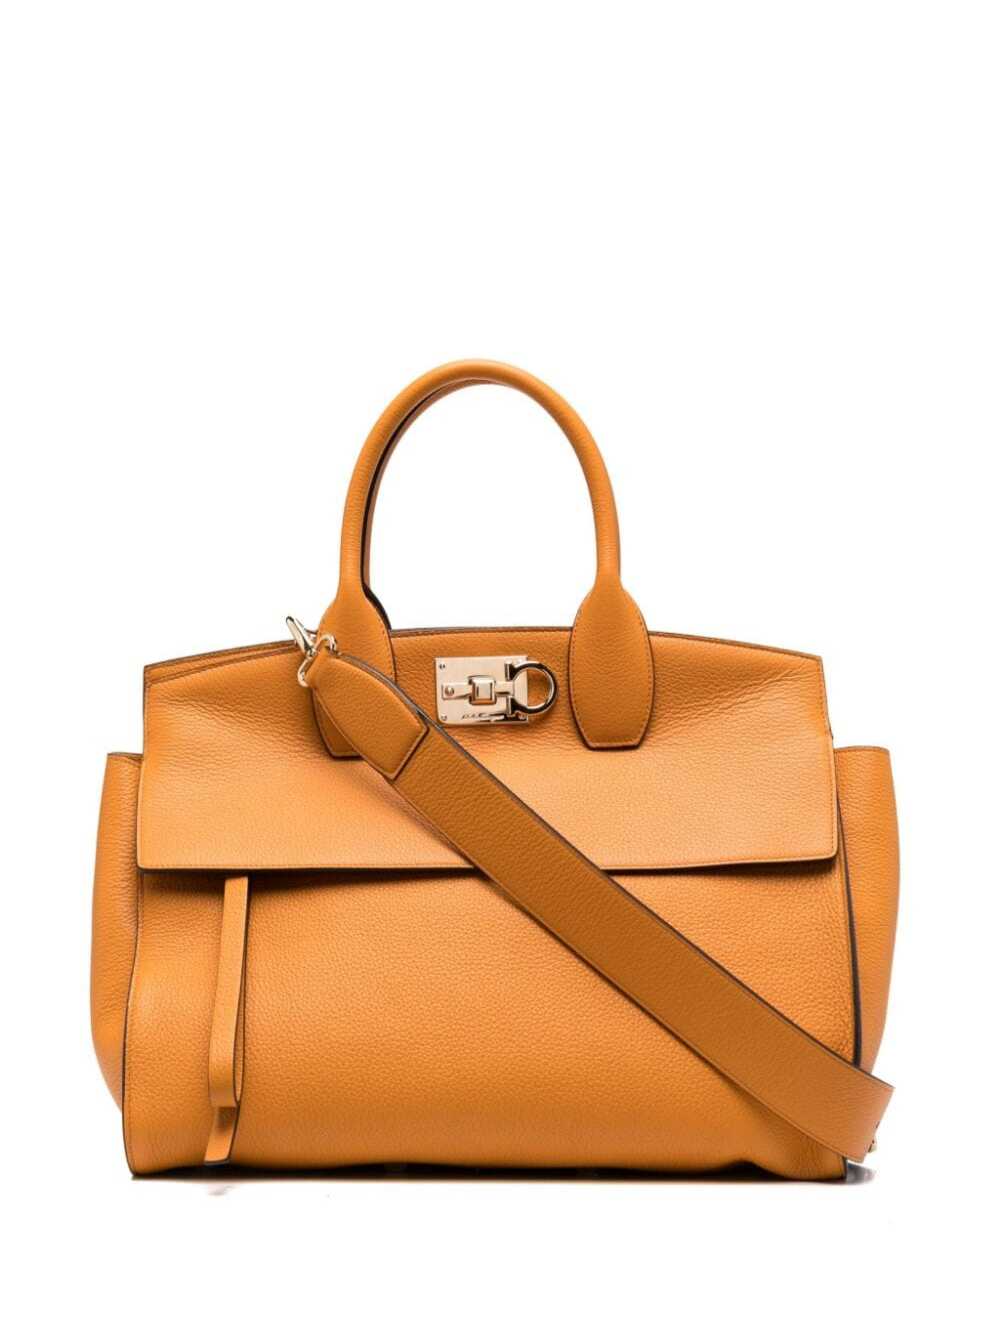 Salvatore Ferragamo Womans The Studio Orange Leather Handbag